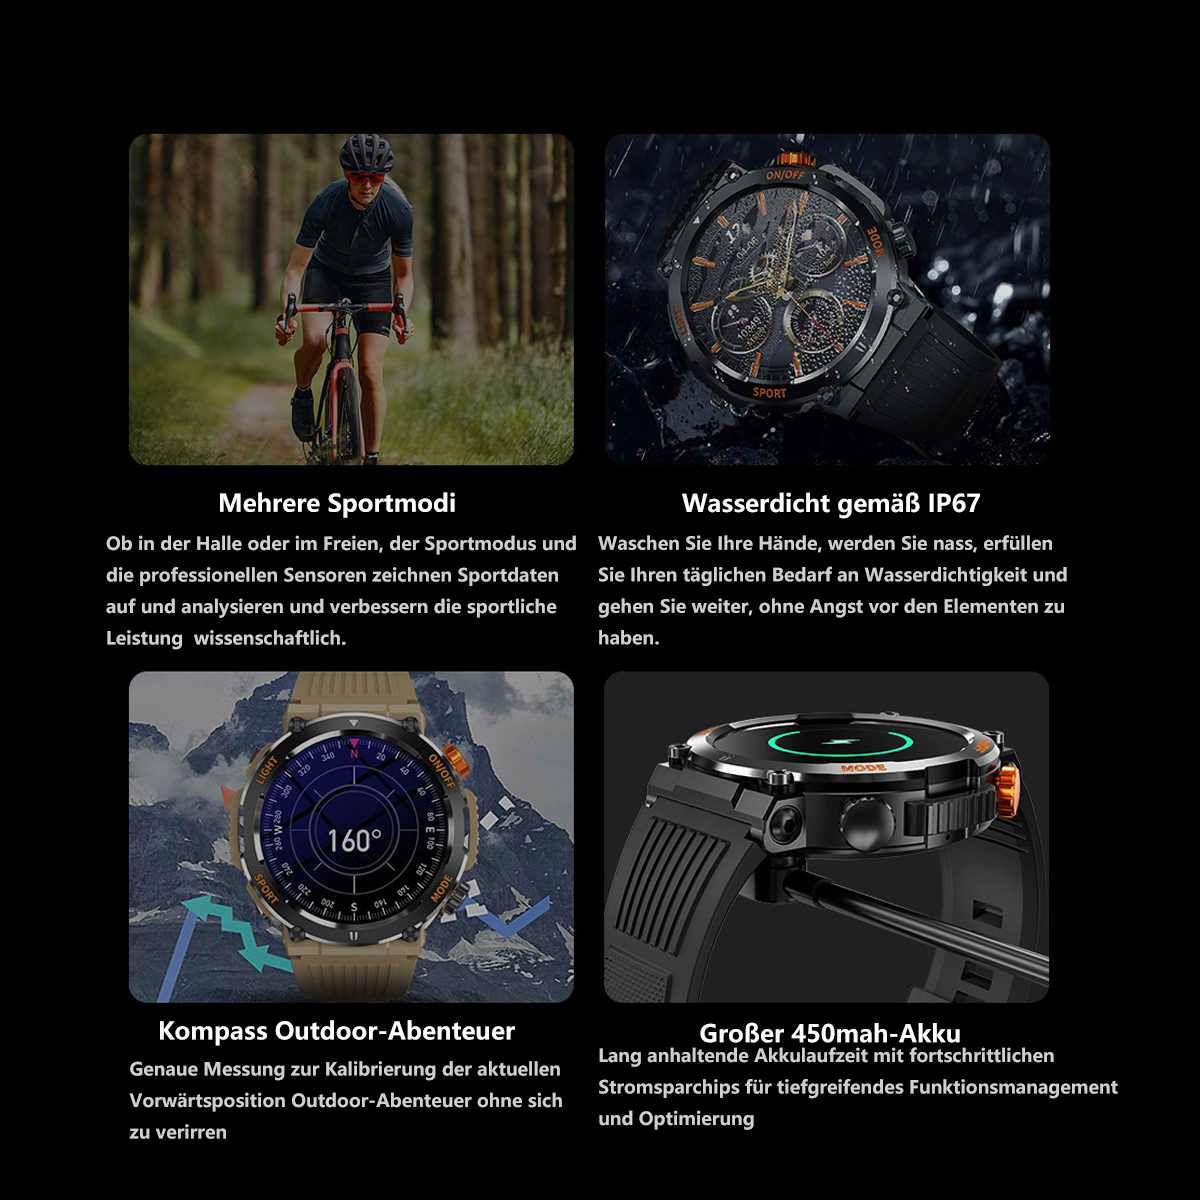 SYNTEK Smart Smartwatch LED Silikon Watch Silikon, Beleuchtung Outdoor Sportuhr Kompass Herzfrequenzmesser Wasserdicht Blau